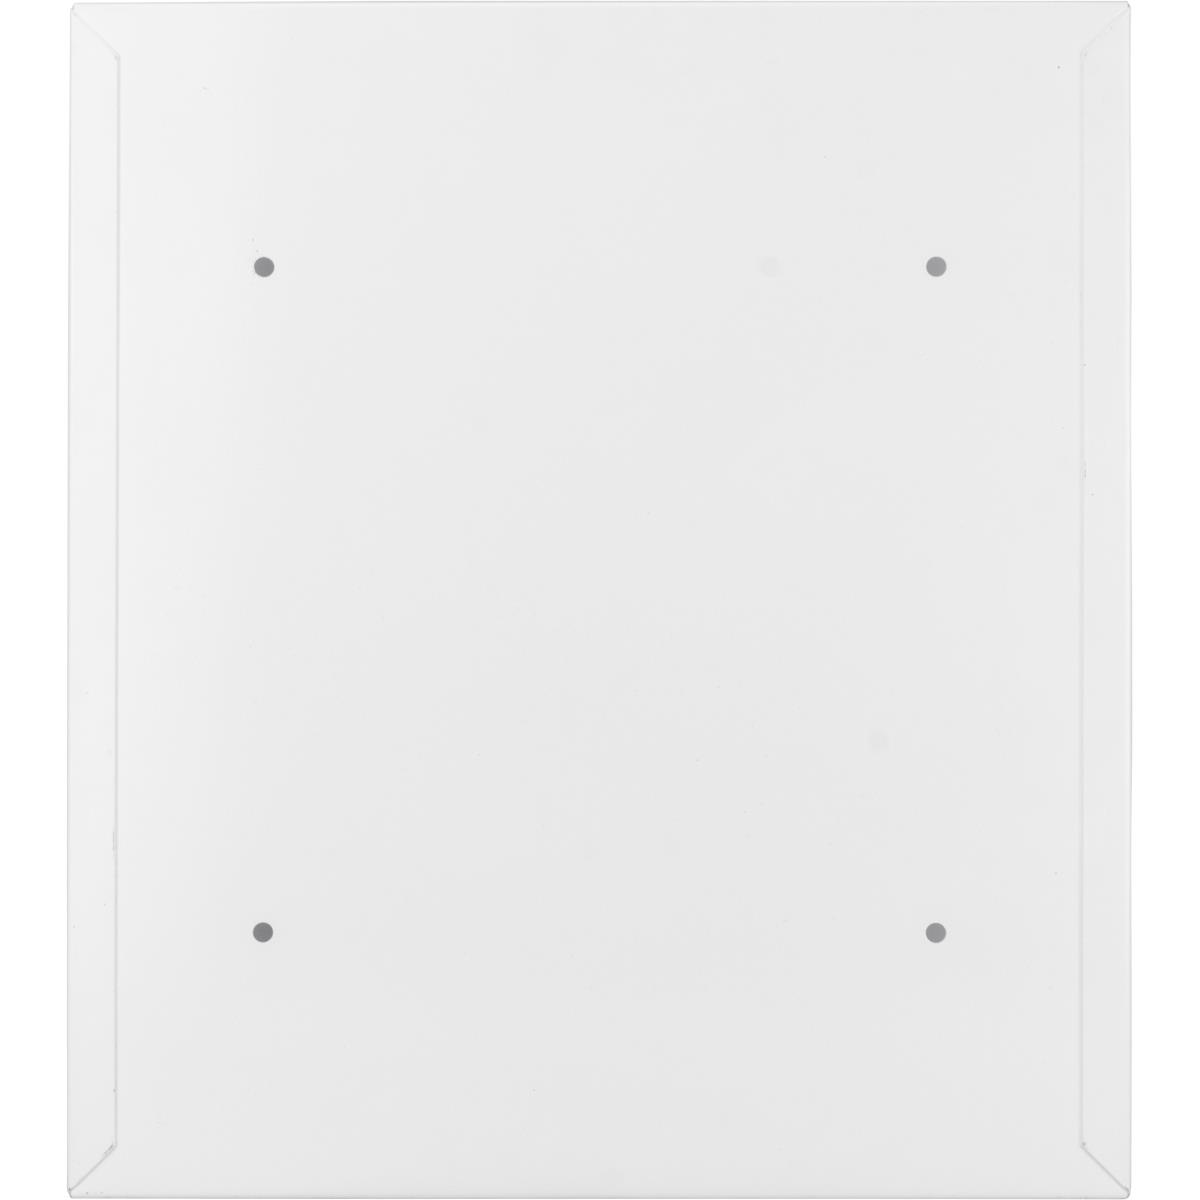 Cb12822 Standard Medical Cabinet, White